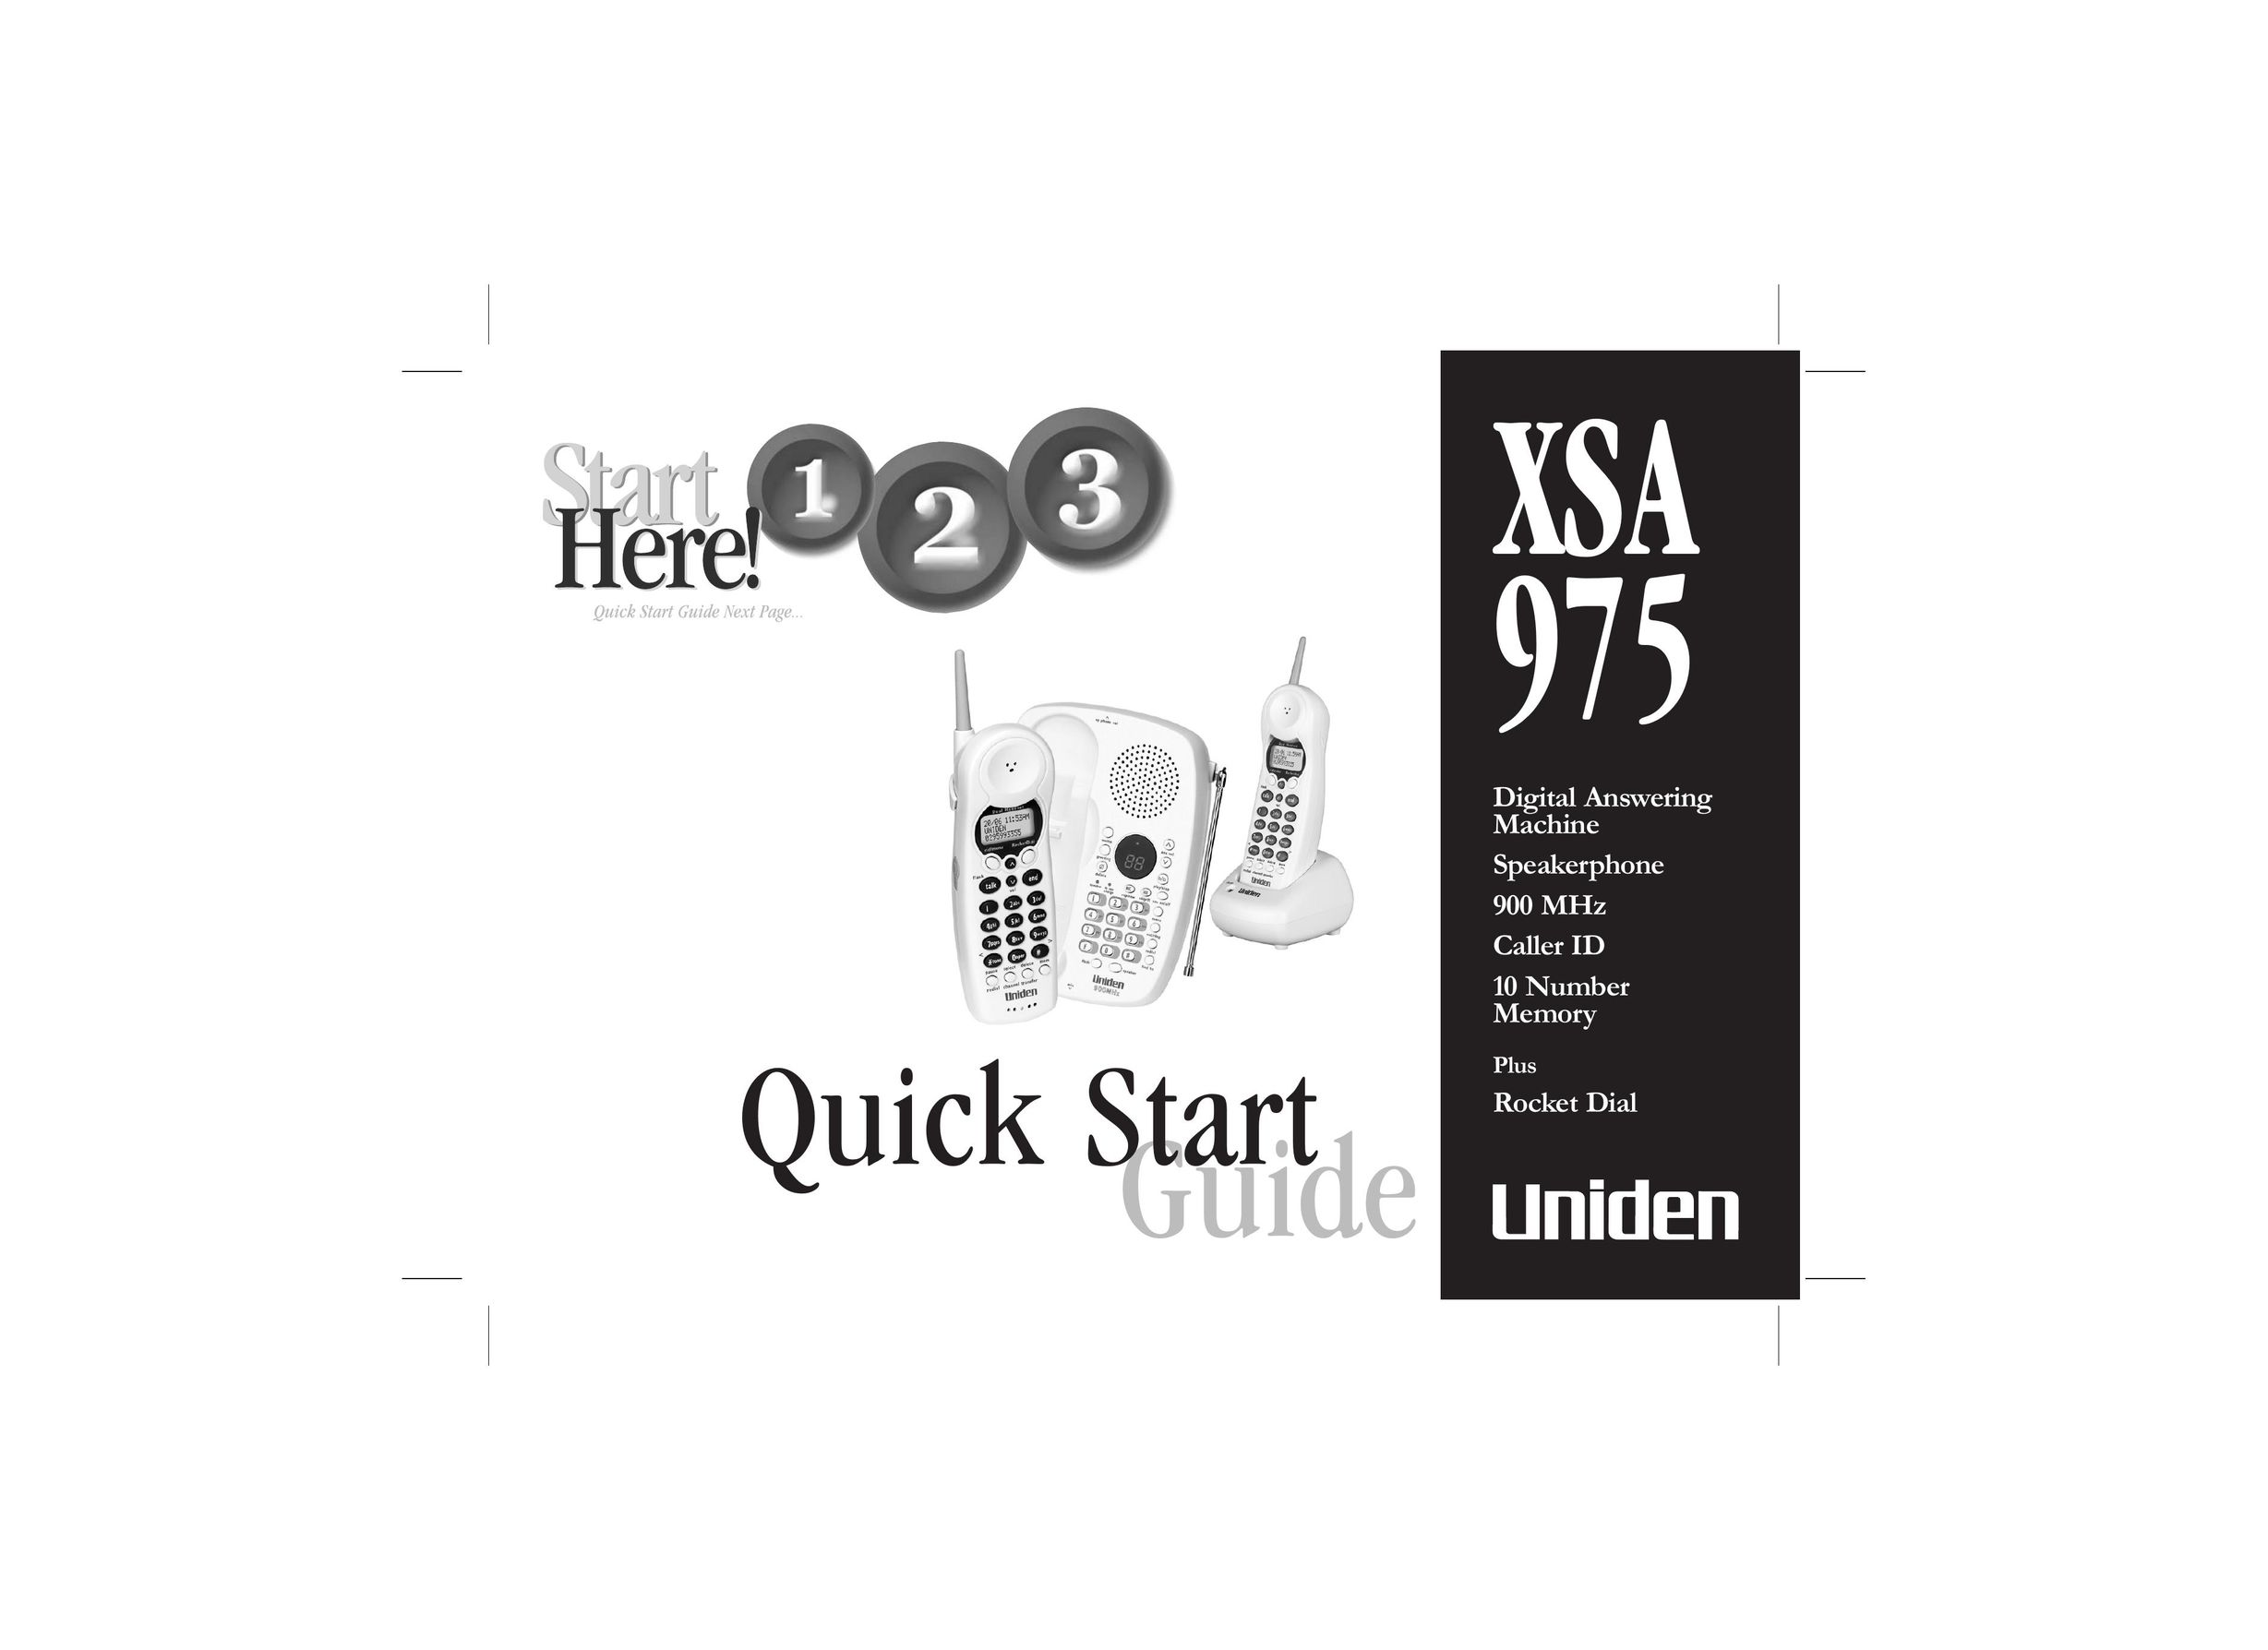 Uniden XSA 975 Answering Machine User Manual